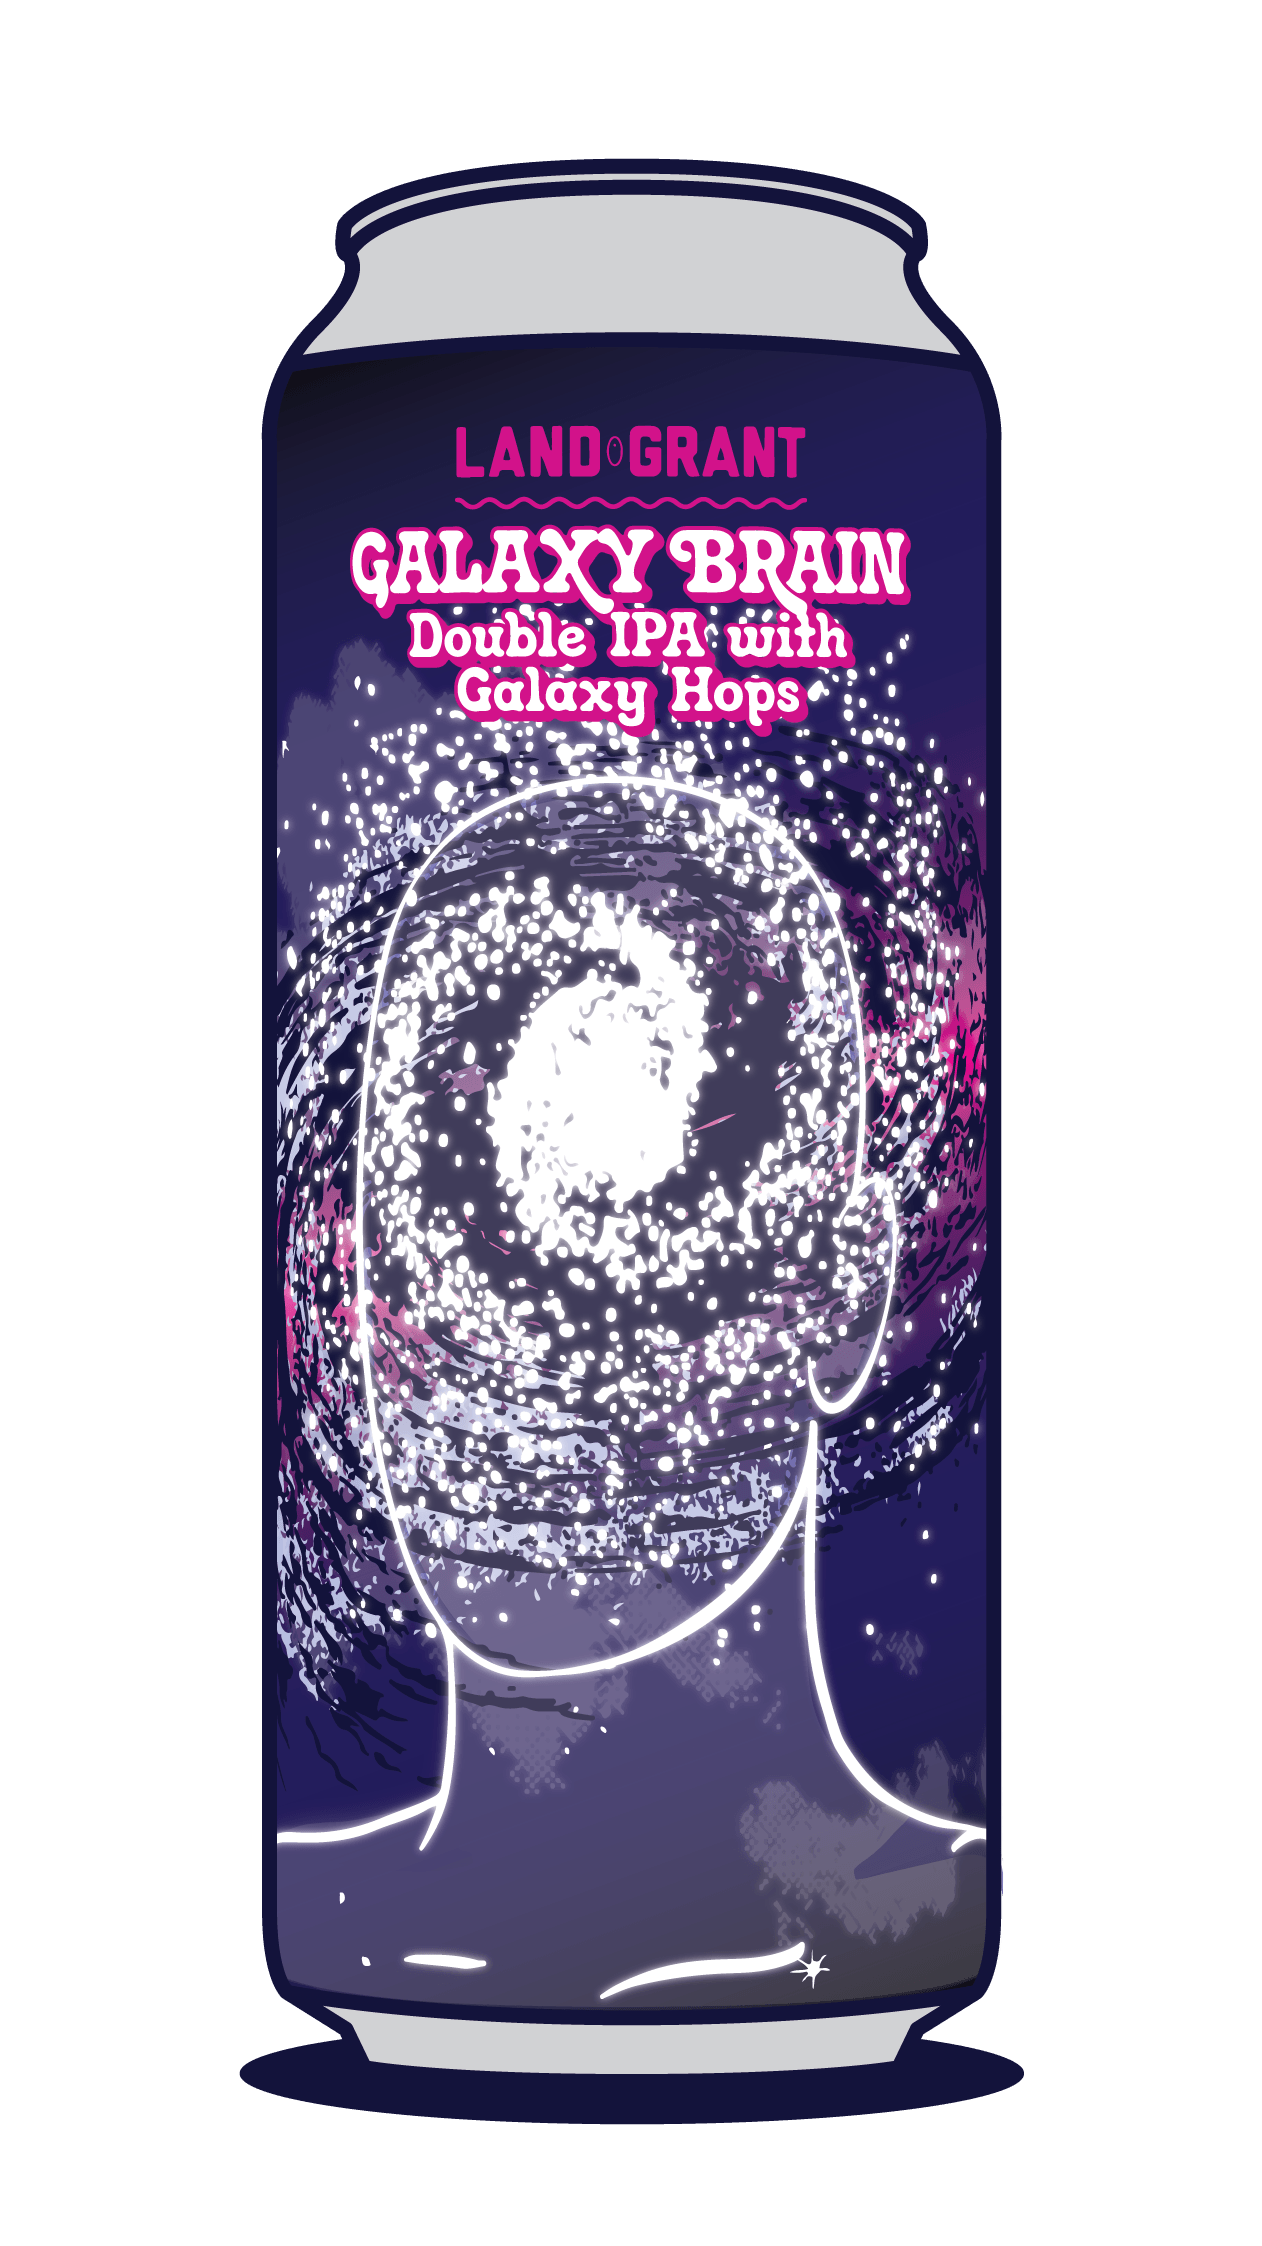 Galaxy Brain main image